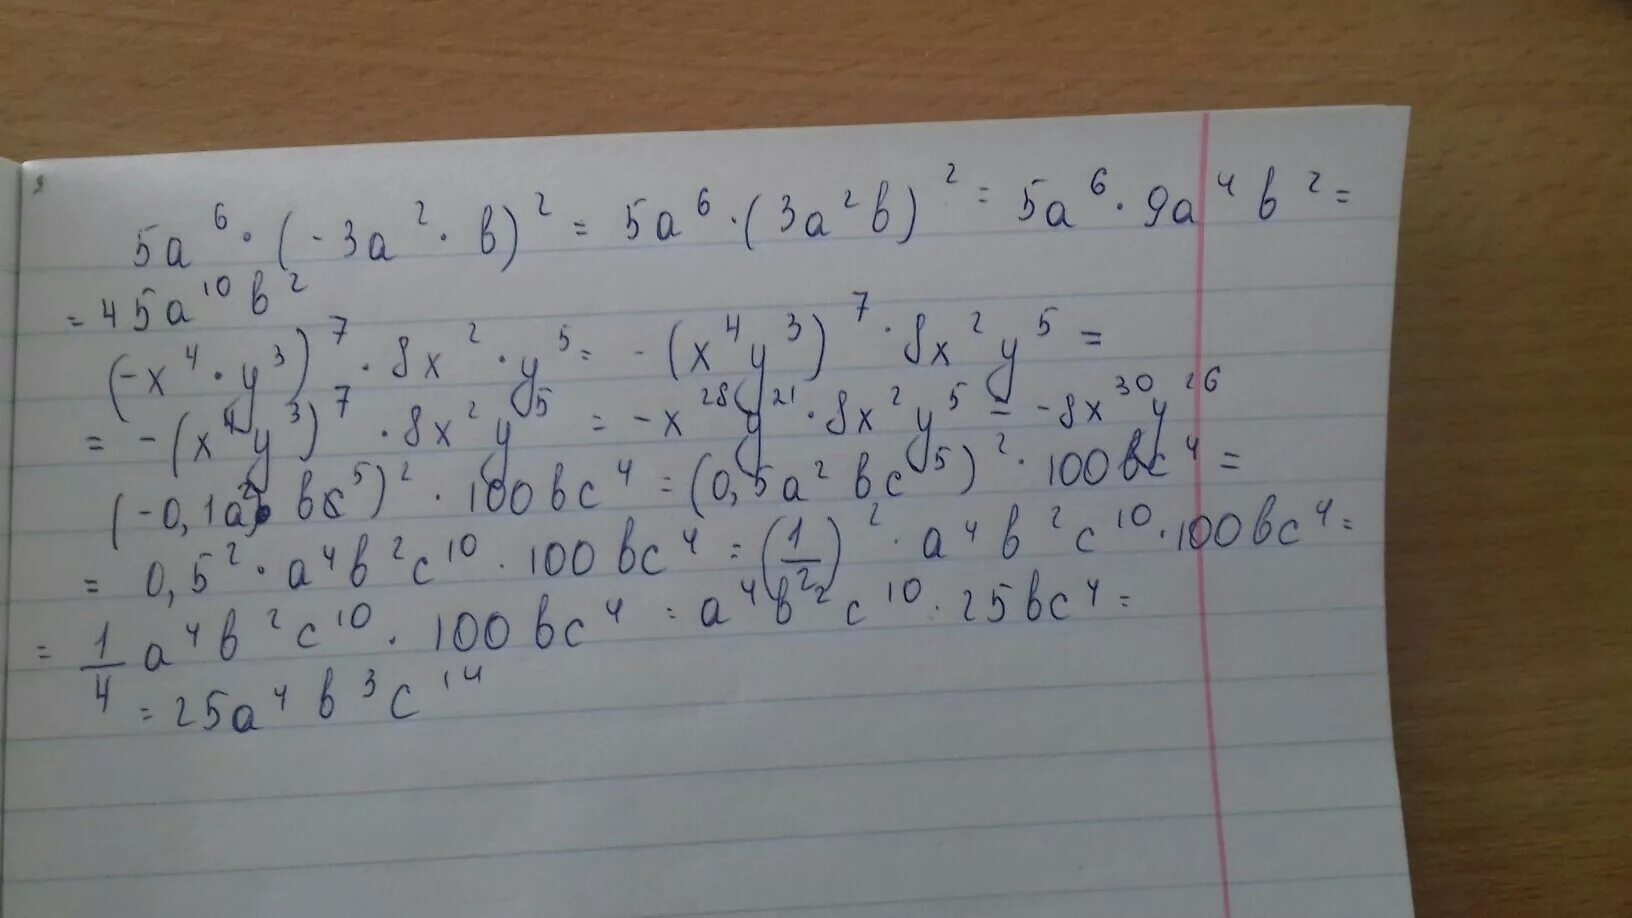 X 8 0 3 класс. Упростите выражение (2x-3y)-(5x+2y. 4x-5-7x+2+3x-1-3y+2+3x-y упростить выражение. (4y-x^4+3x^2y)+(-5y-7x^2-4x^4) упростить выражение. Упростите выражение 4x+2x+6/x2-1.